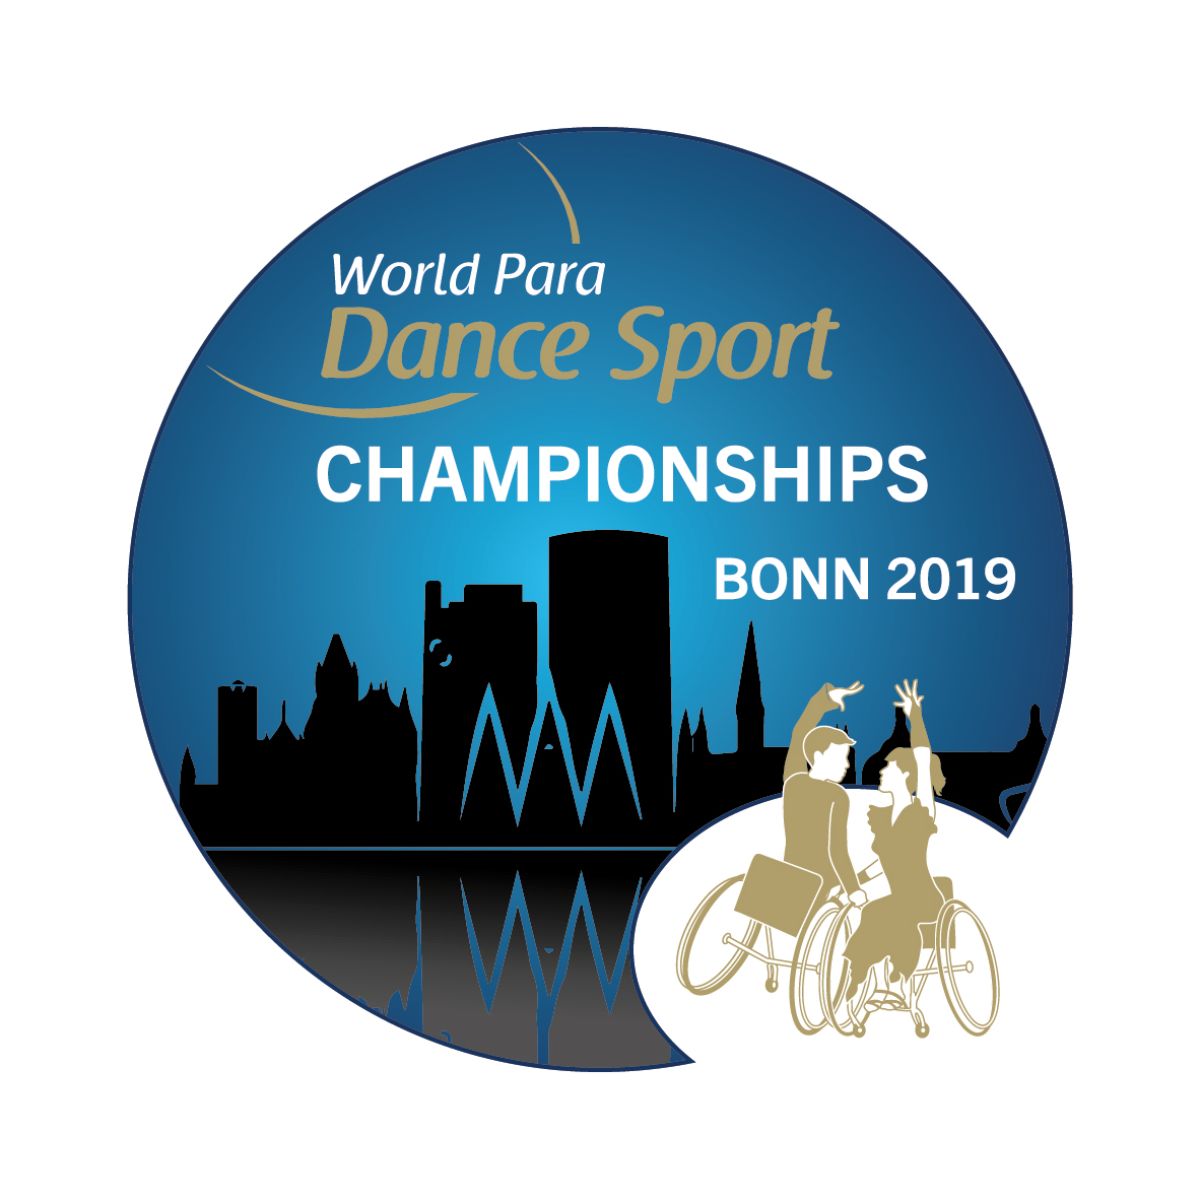 Bonn 2019 World Para Dance Sport Championship logo